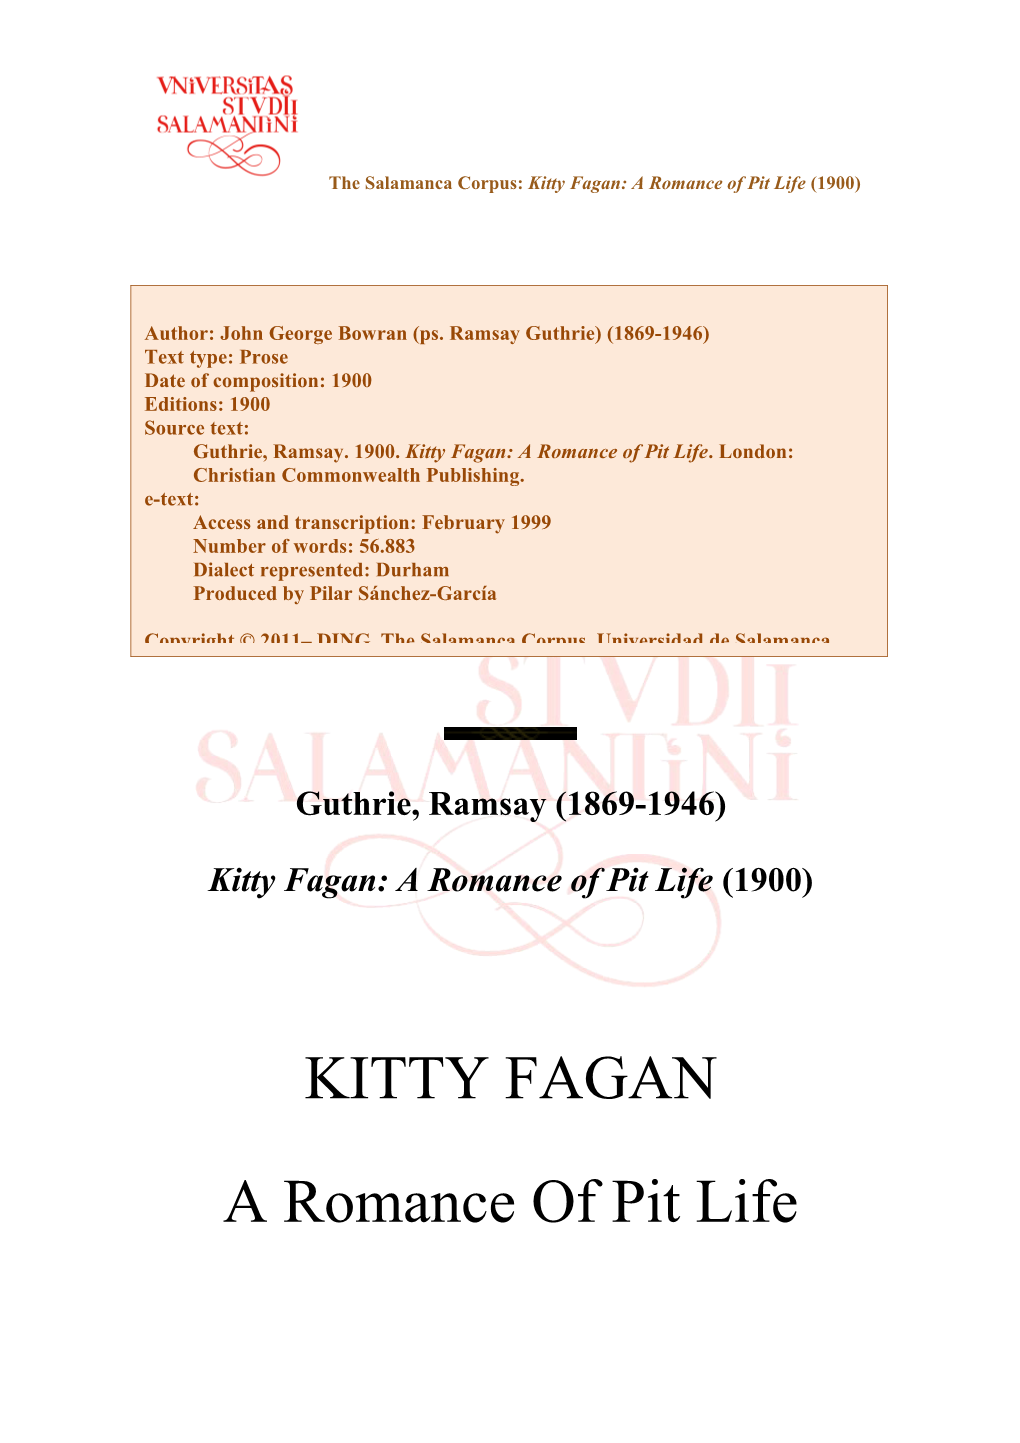 Kitty Fagan: a Romance of Pit Life(1900)